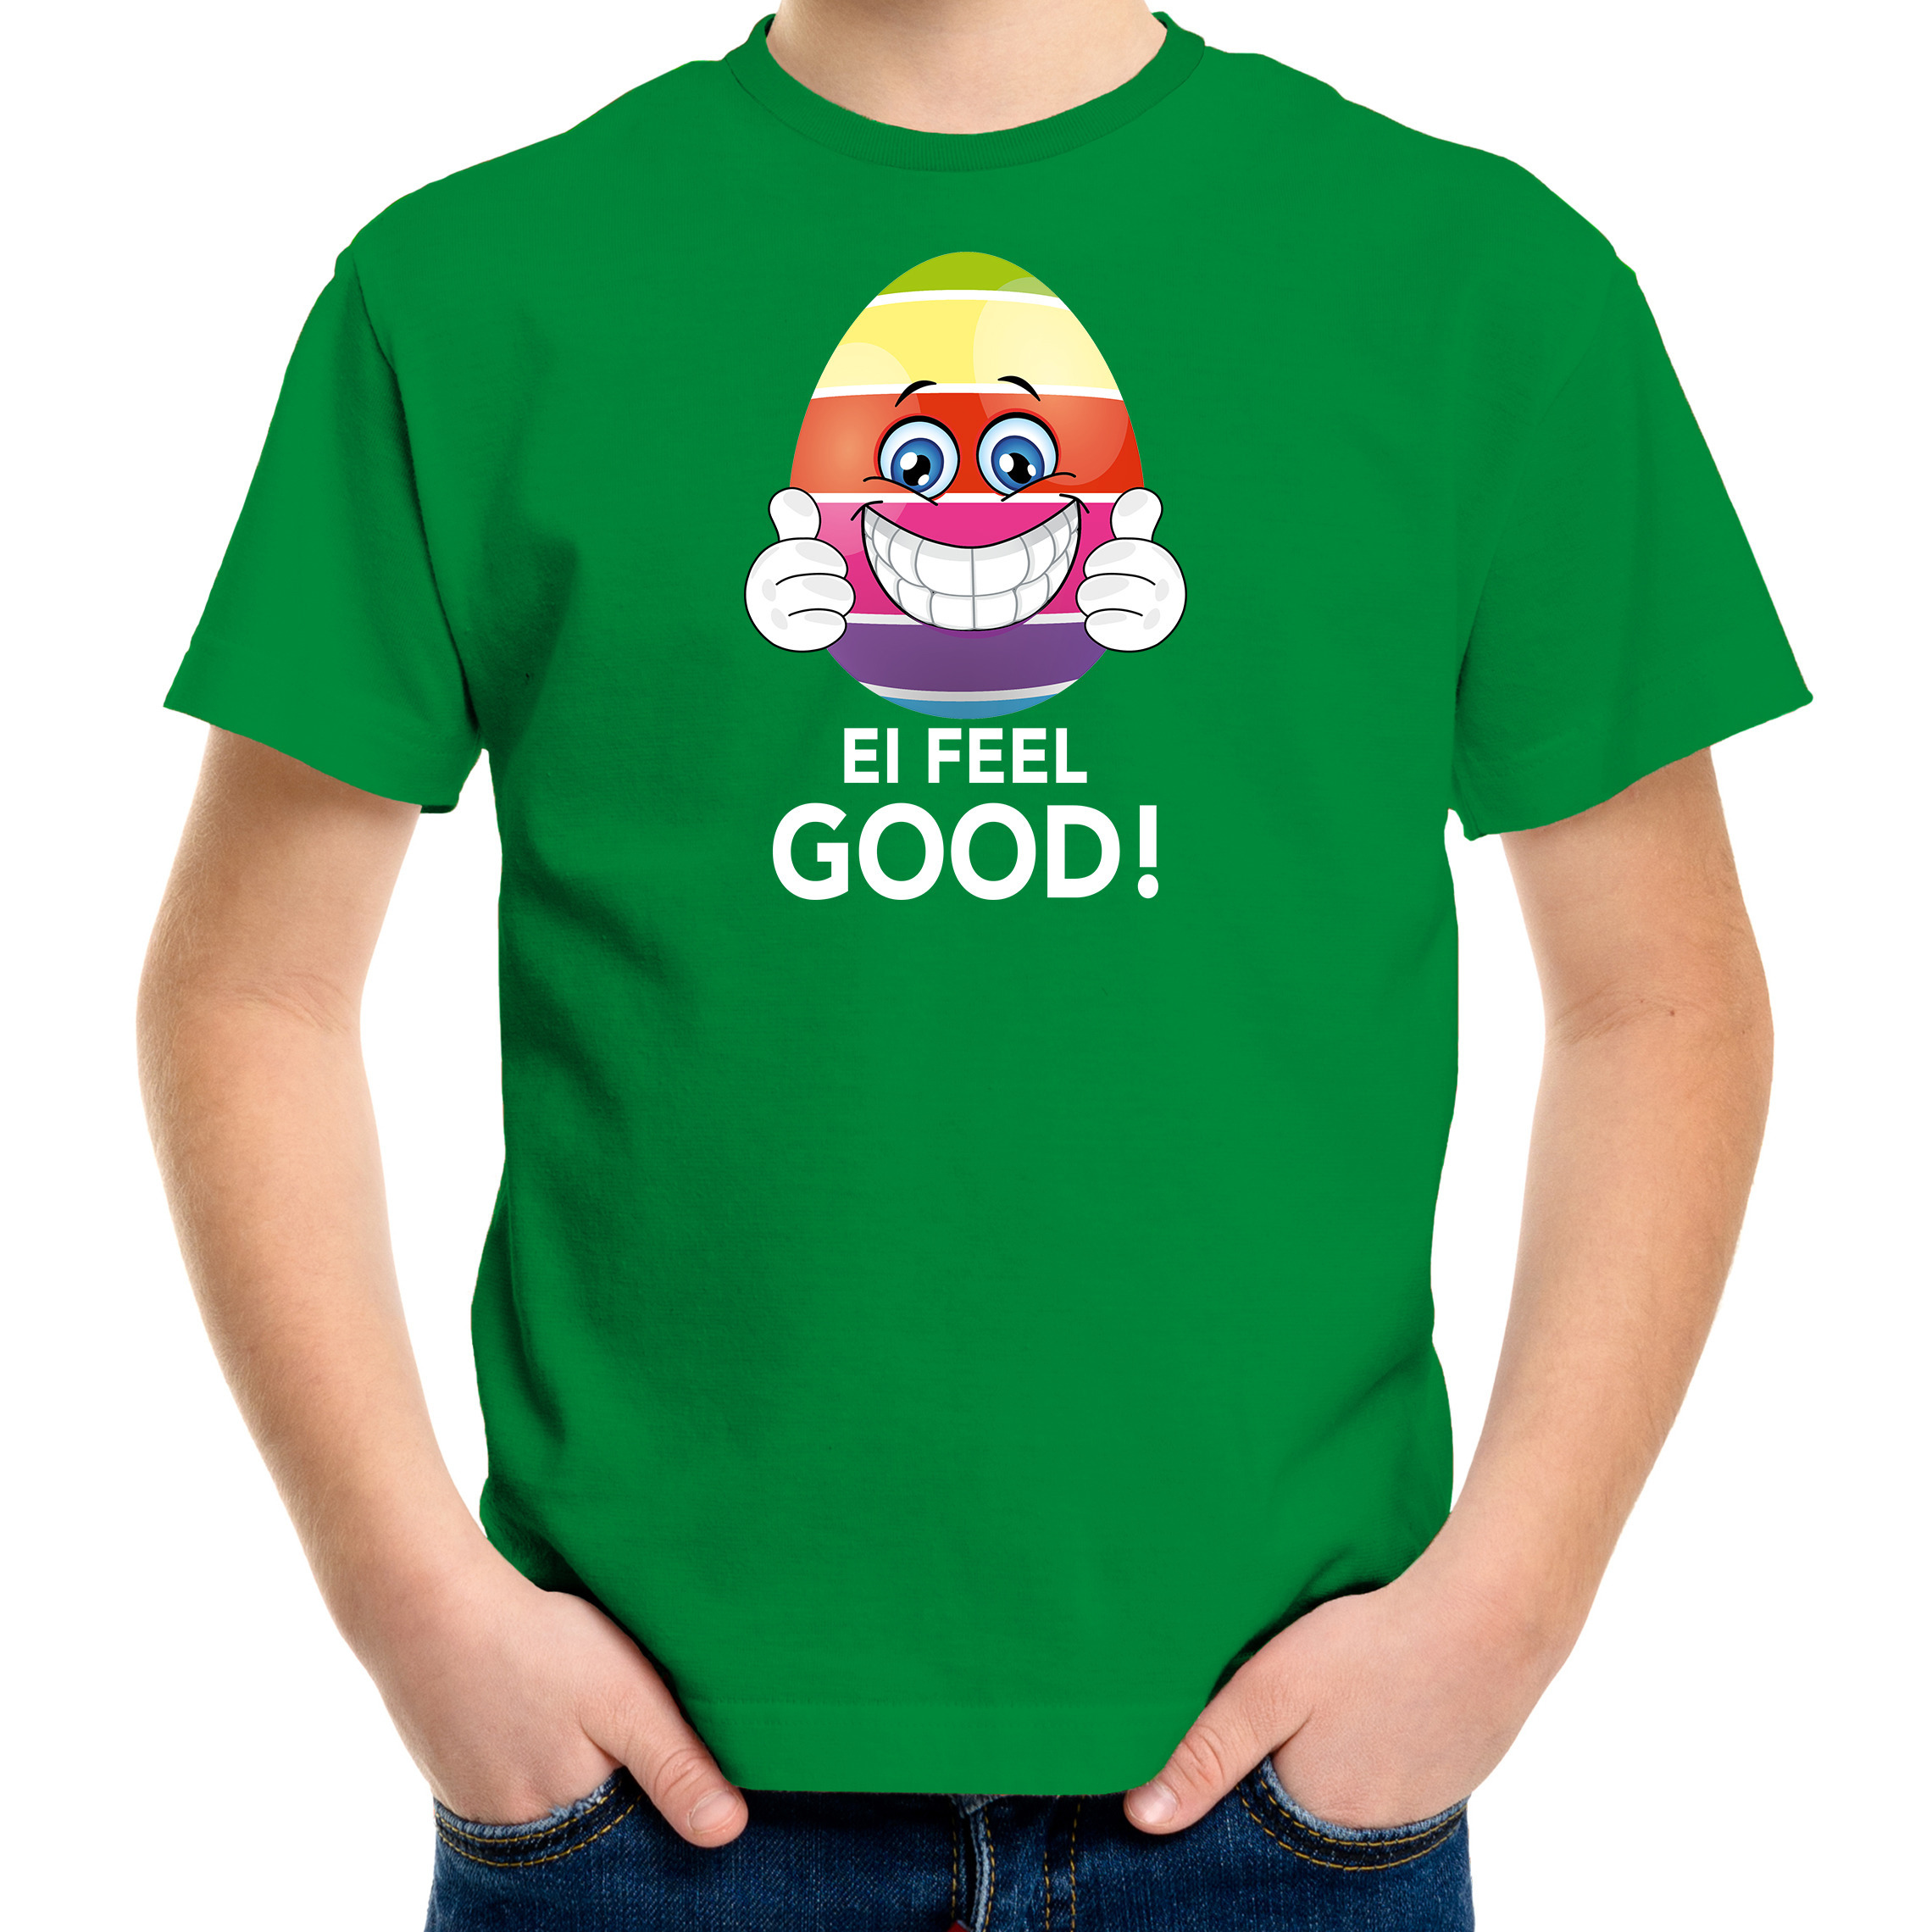 Vrolijk Paasei ei feel good t-shirt groen voor heren Paas kleding-outfit